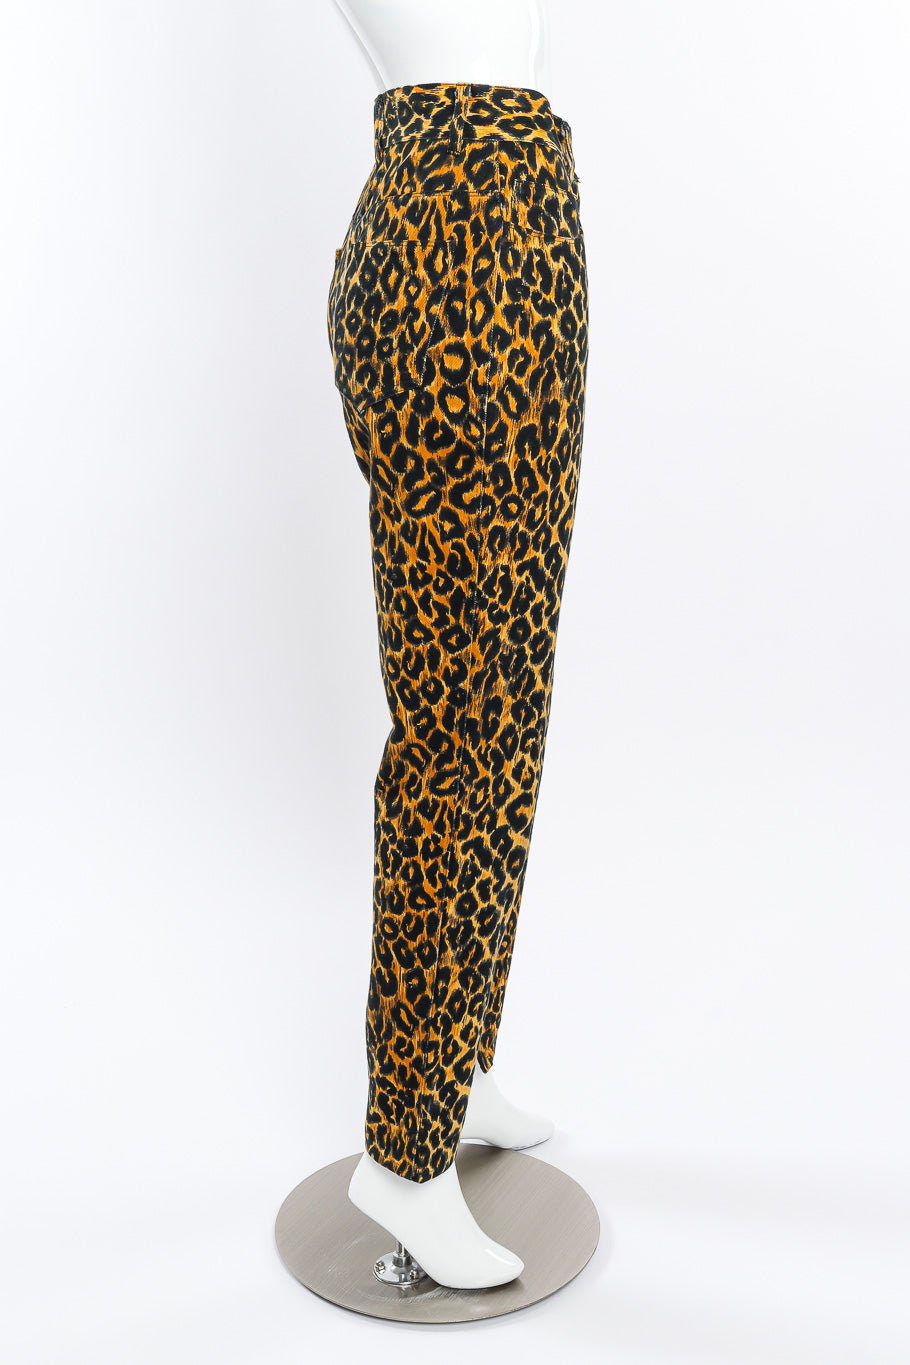 Versus Versace Leopard Print Denim Pant side view on mannequin @Recessla